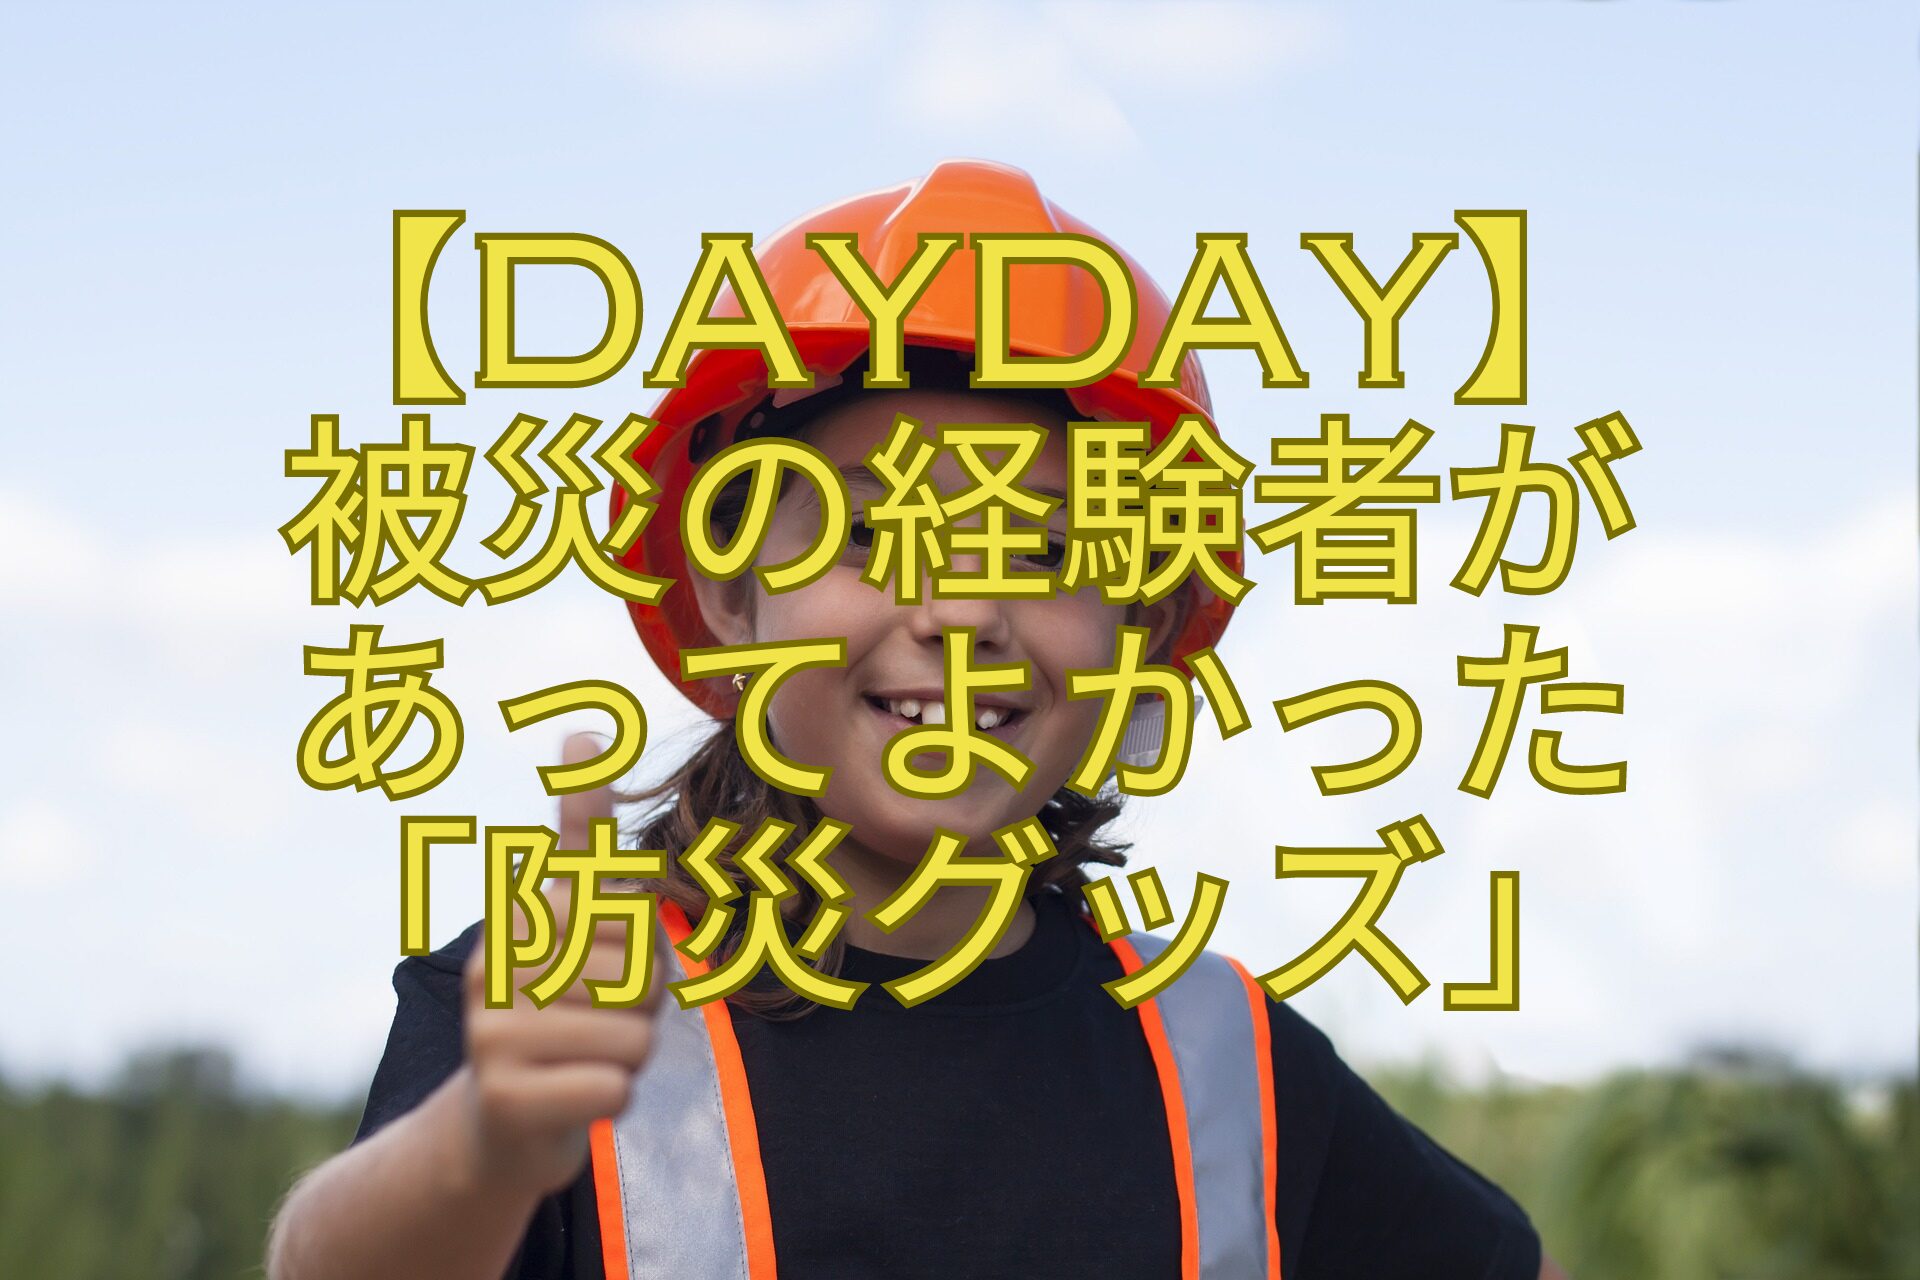 【DayDay】-被災の経験者が-あってよかった-「防災グッズ」